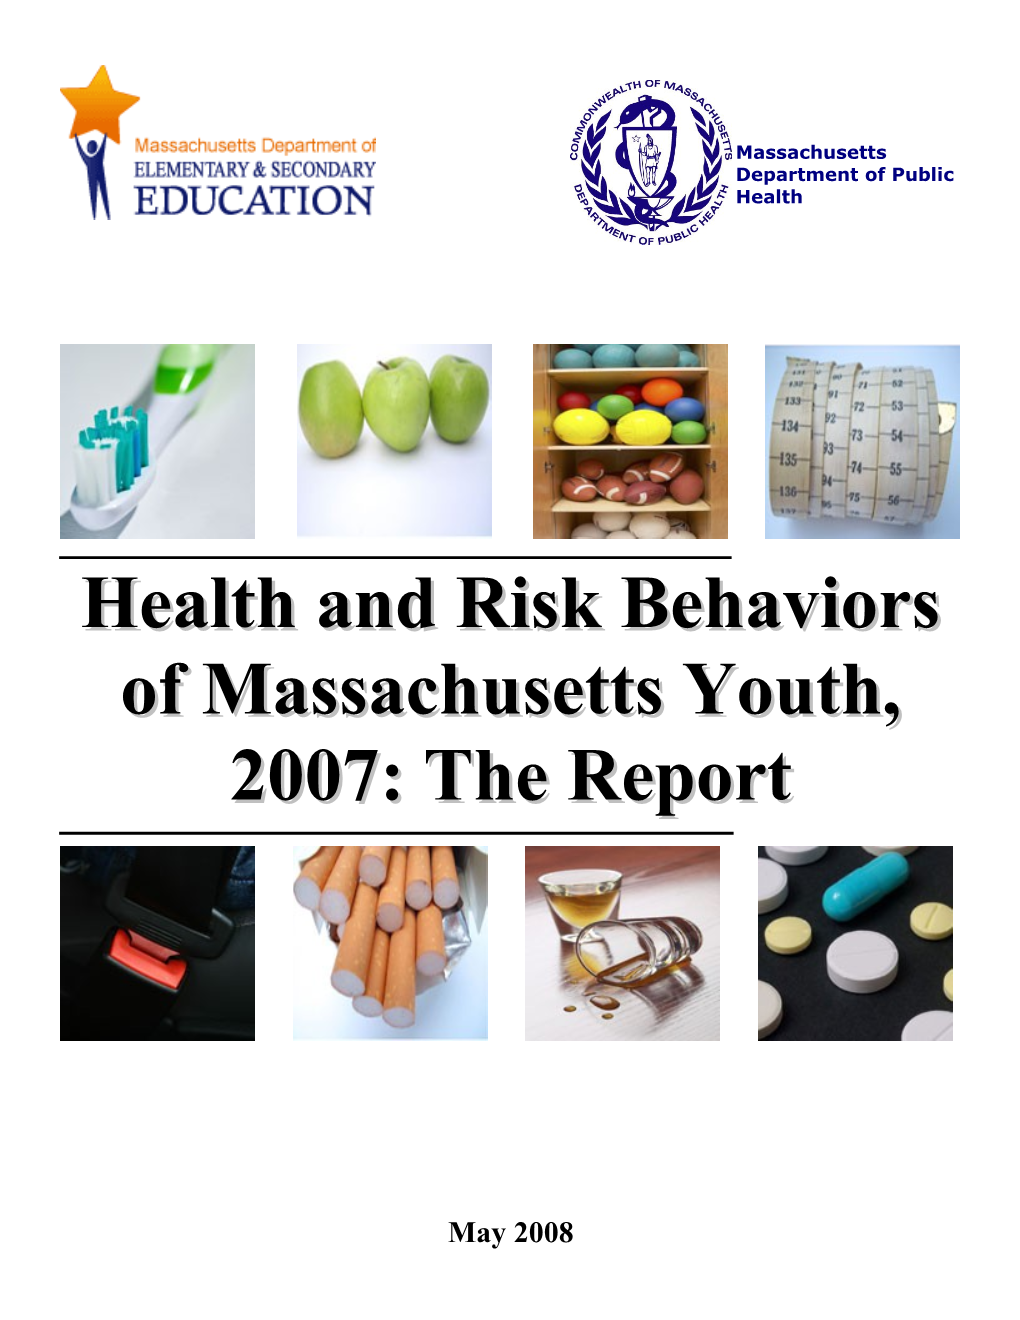 Health and Risk Behaviors of Massachusetts Youth, 2007